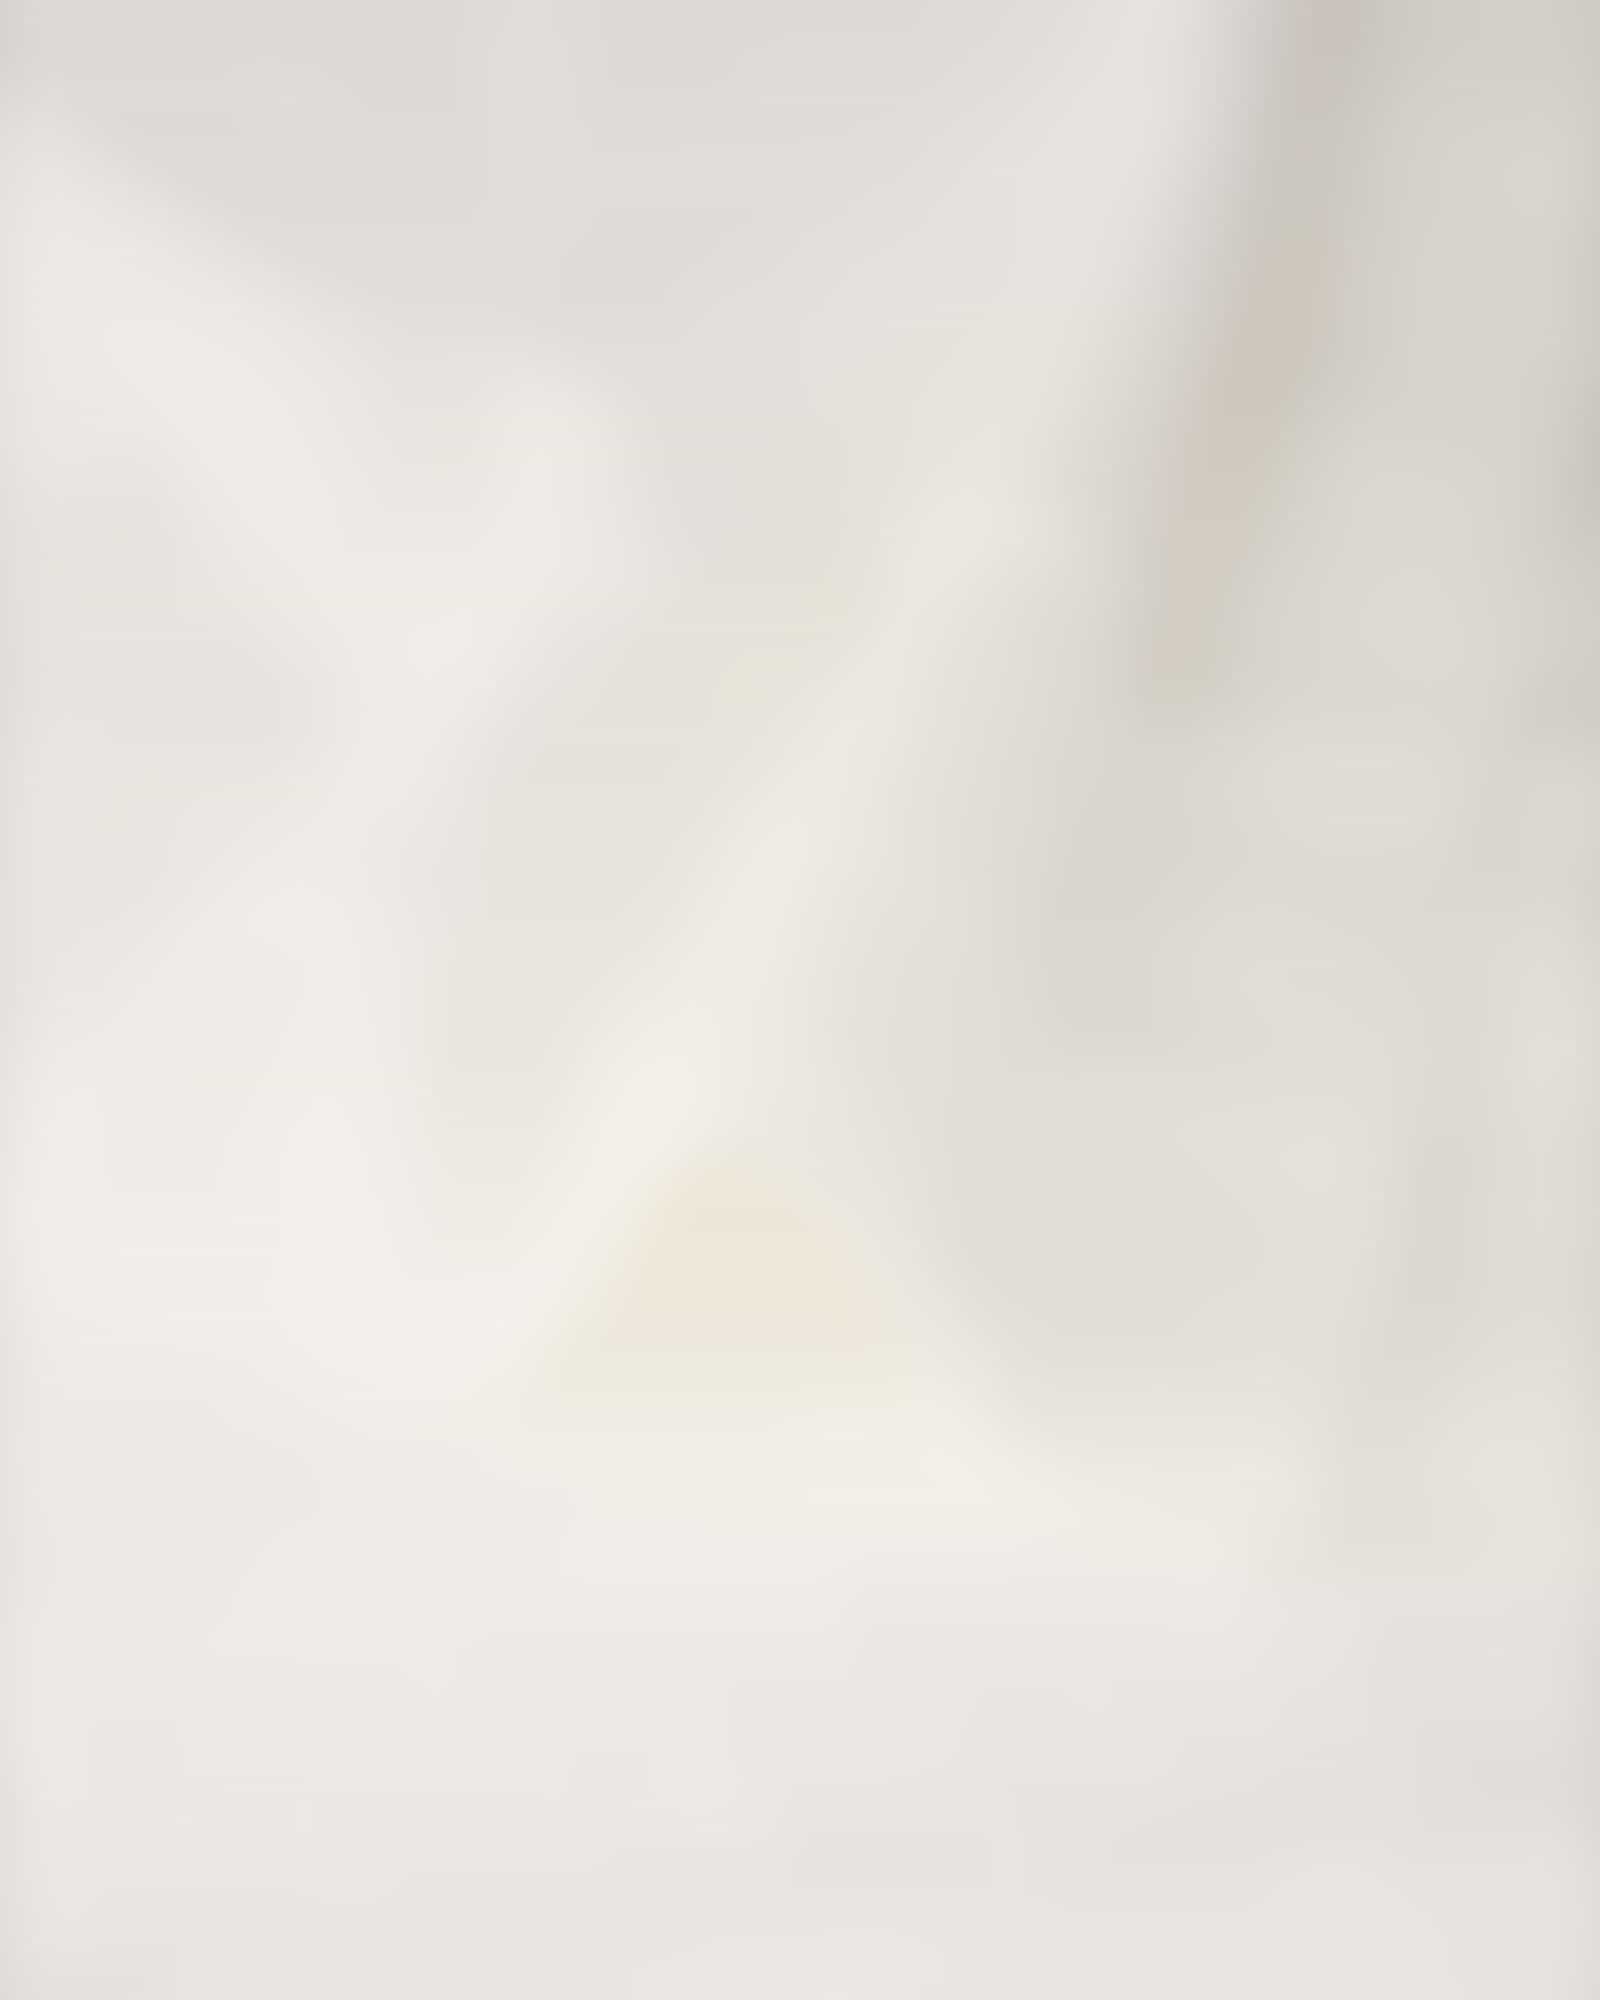 Cawö - Noblesse Uni 1001 - Farbe: 600 - weiß - Gästetuch 30x50 cm